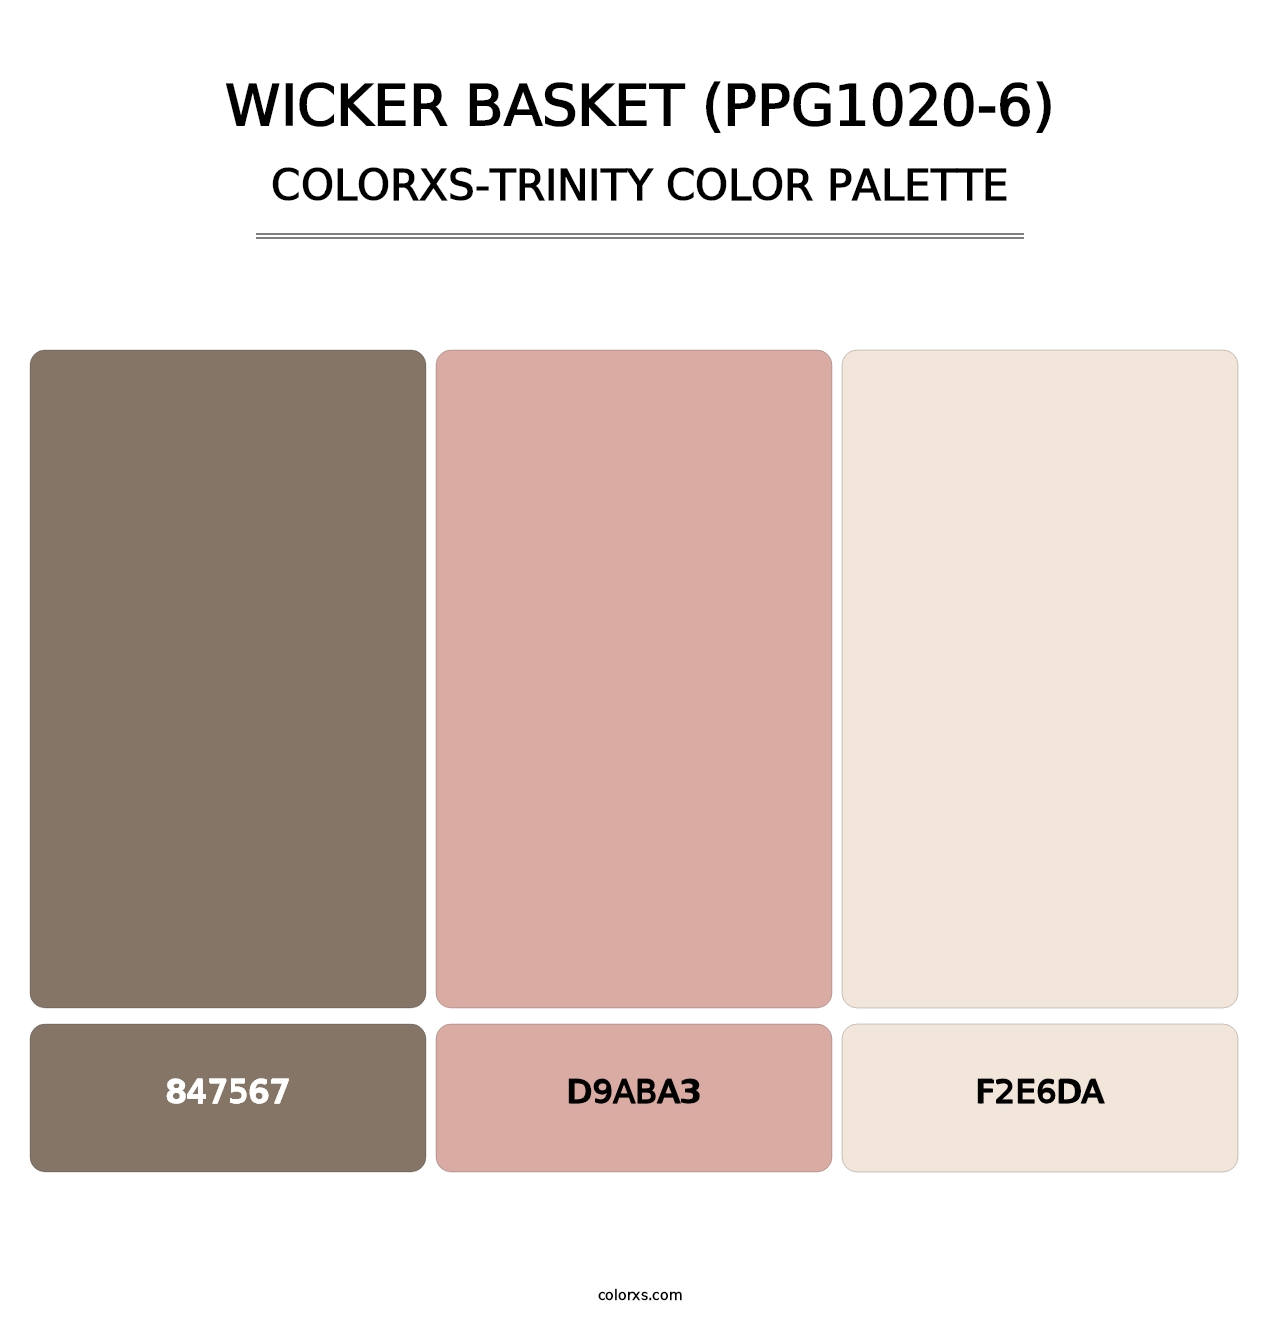 Wicker Basket (PPG1020-6) - Colorxs Trinity Palette